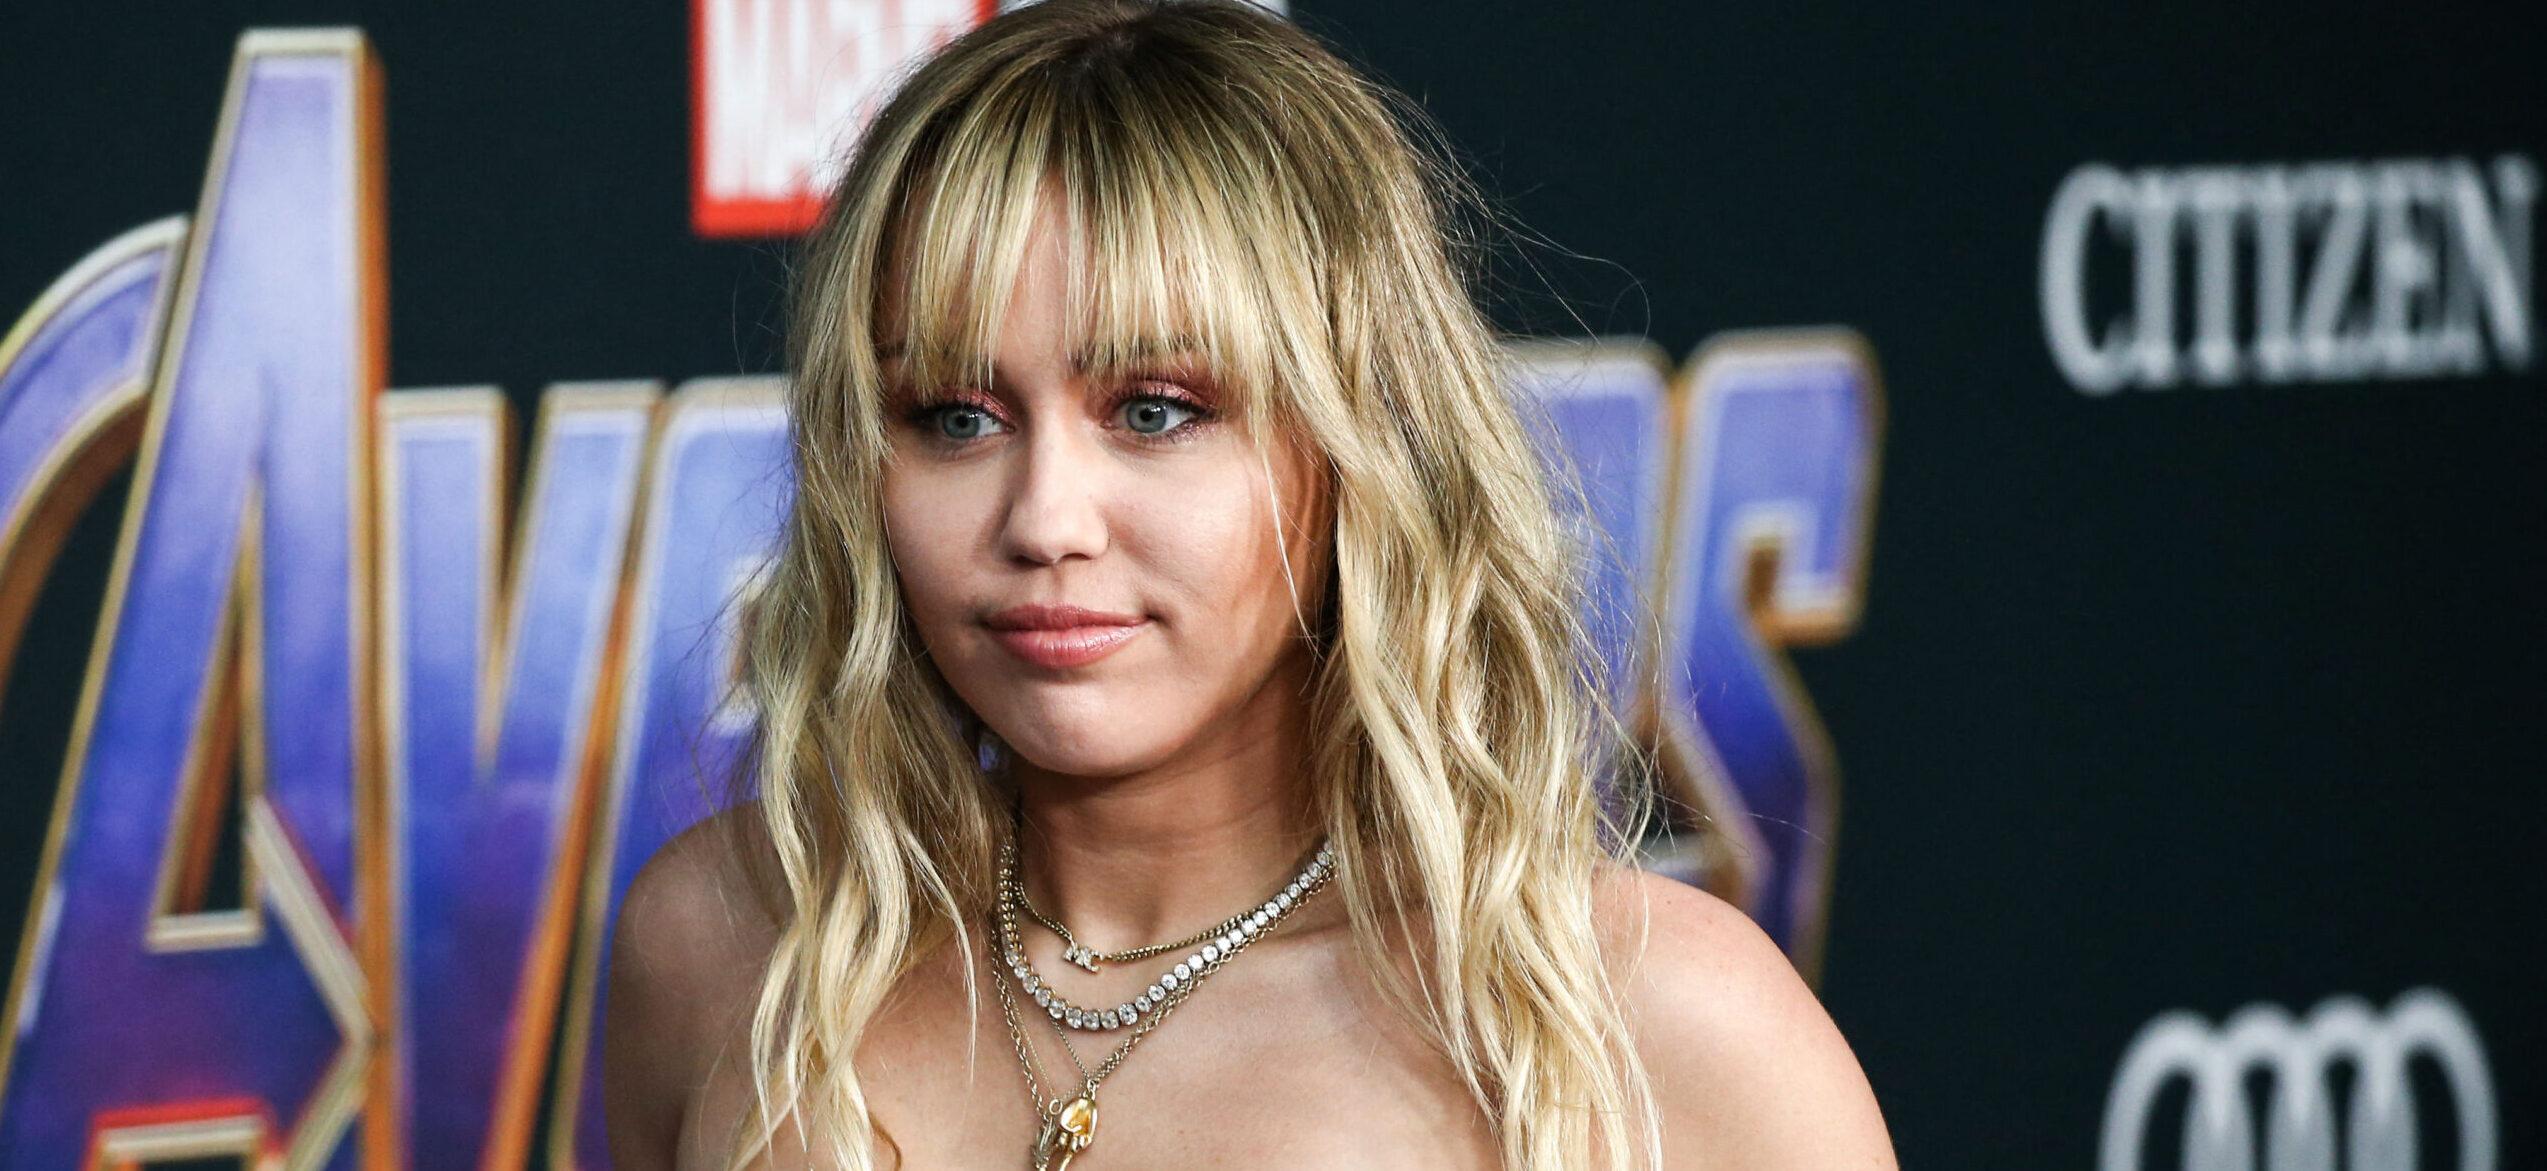 Miley Cyrus granted restraining order against stalker